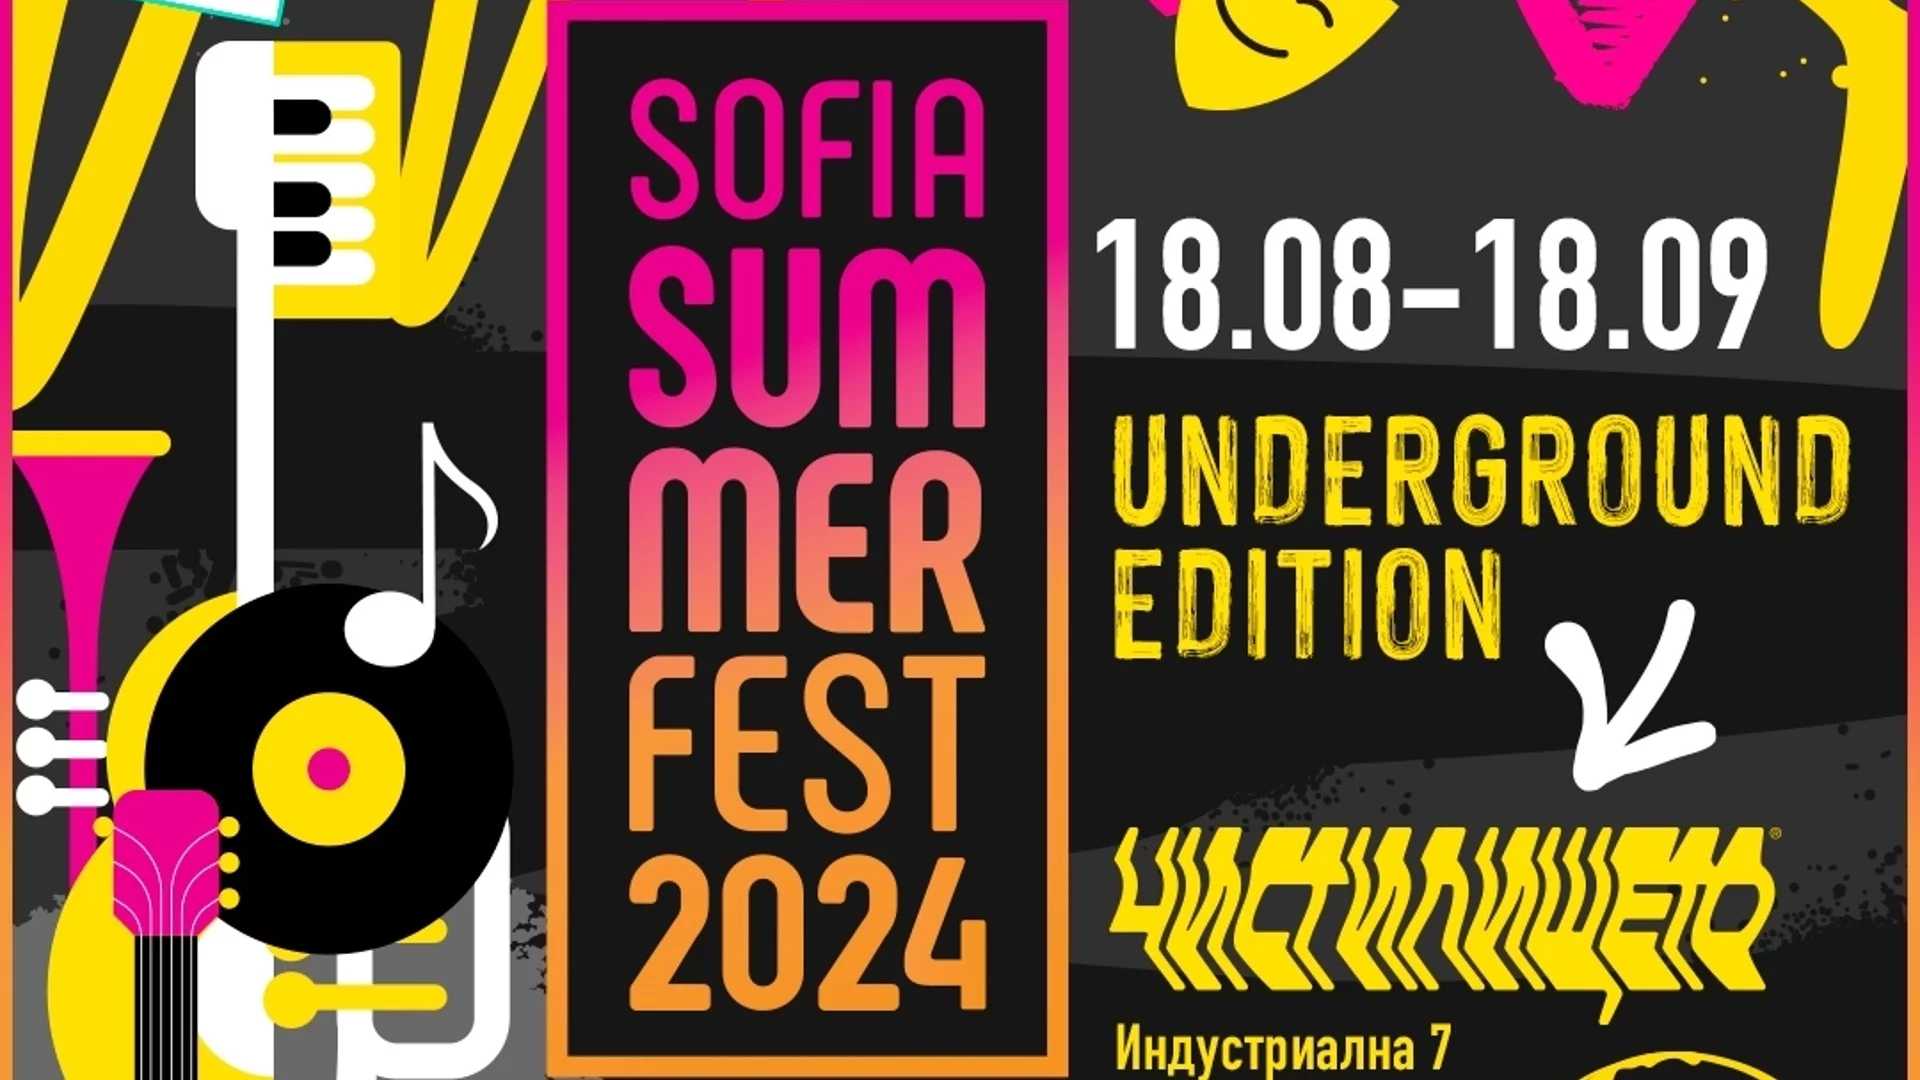 На 19 август започва Sofia Summer Fest Underground в 